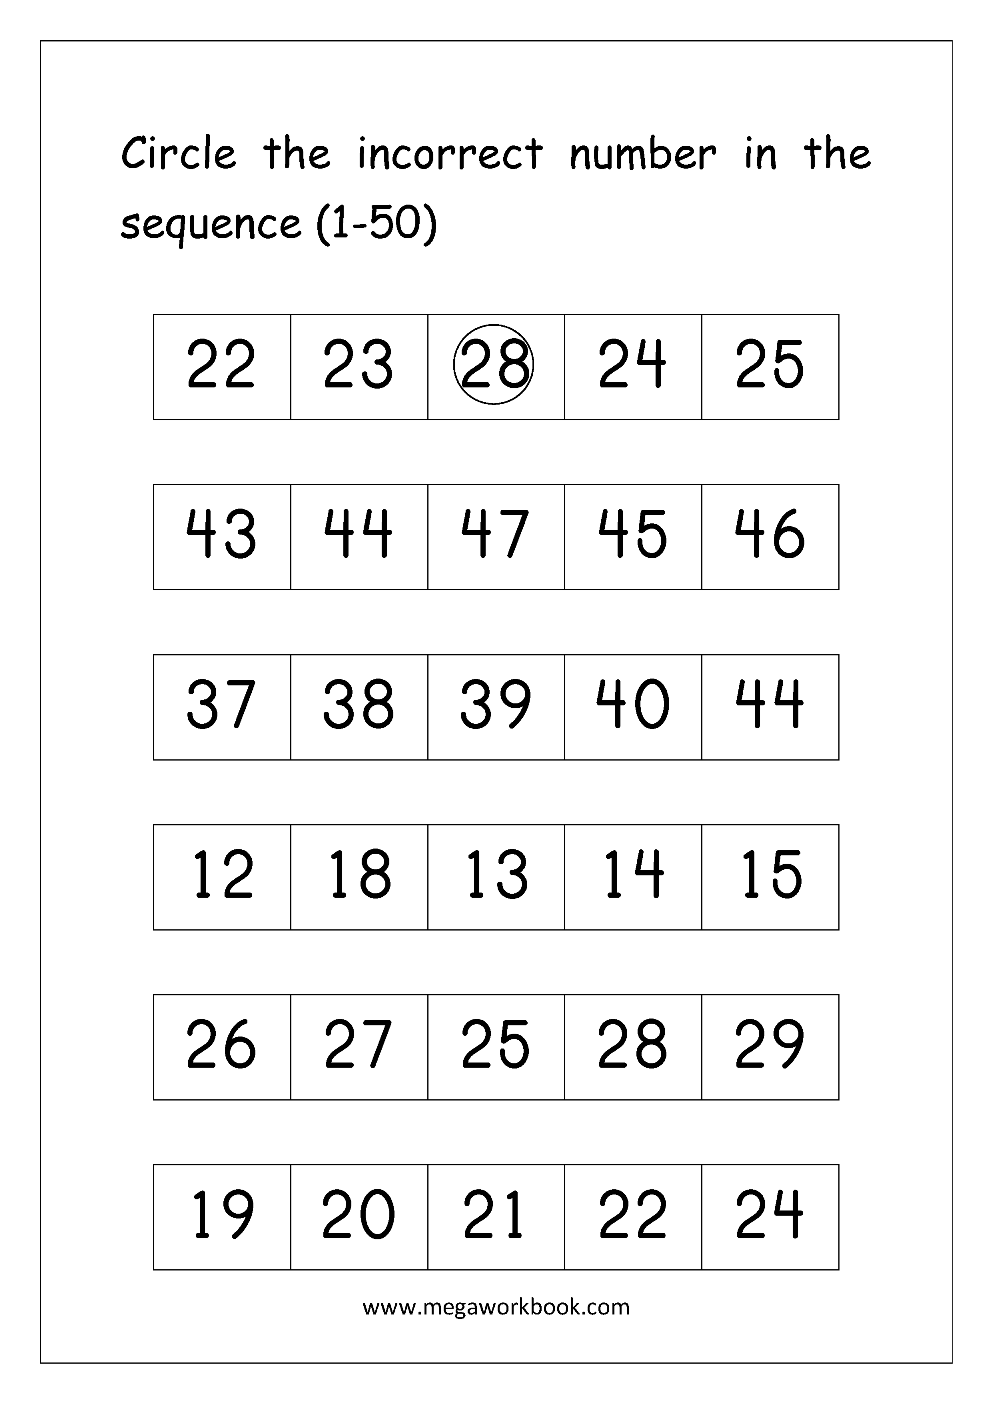 counting-1-50-interactive-worksheet-missing-numbers-1-to-50-8-worksheets-free-printable